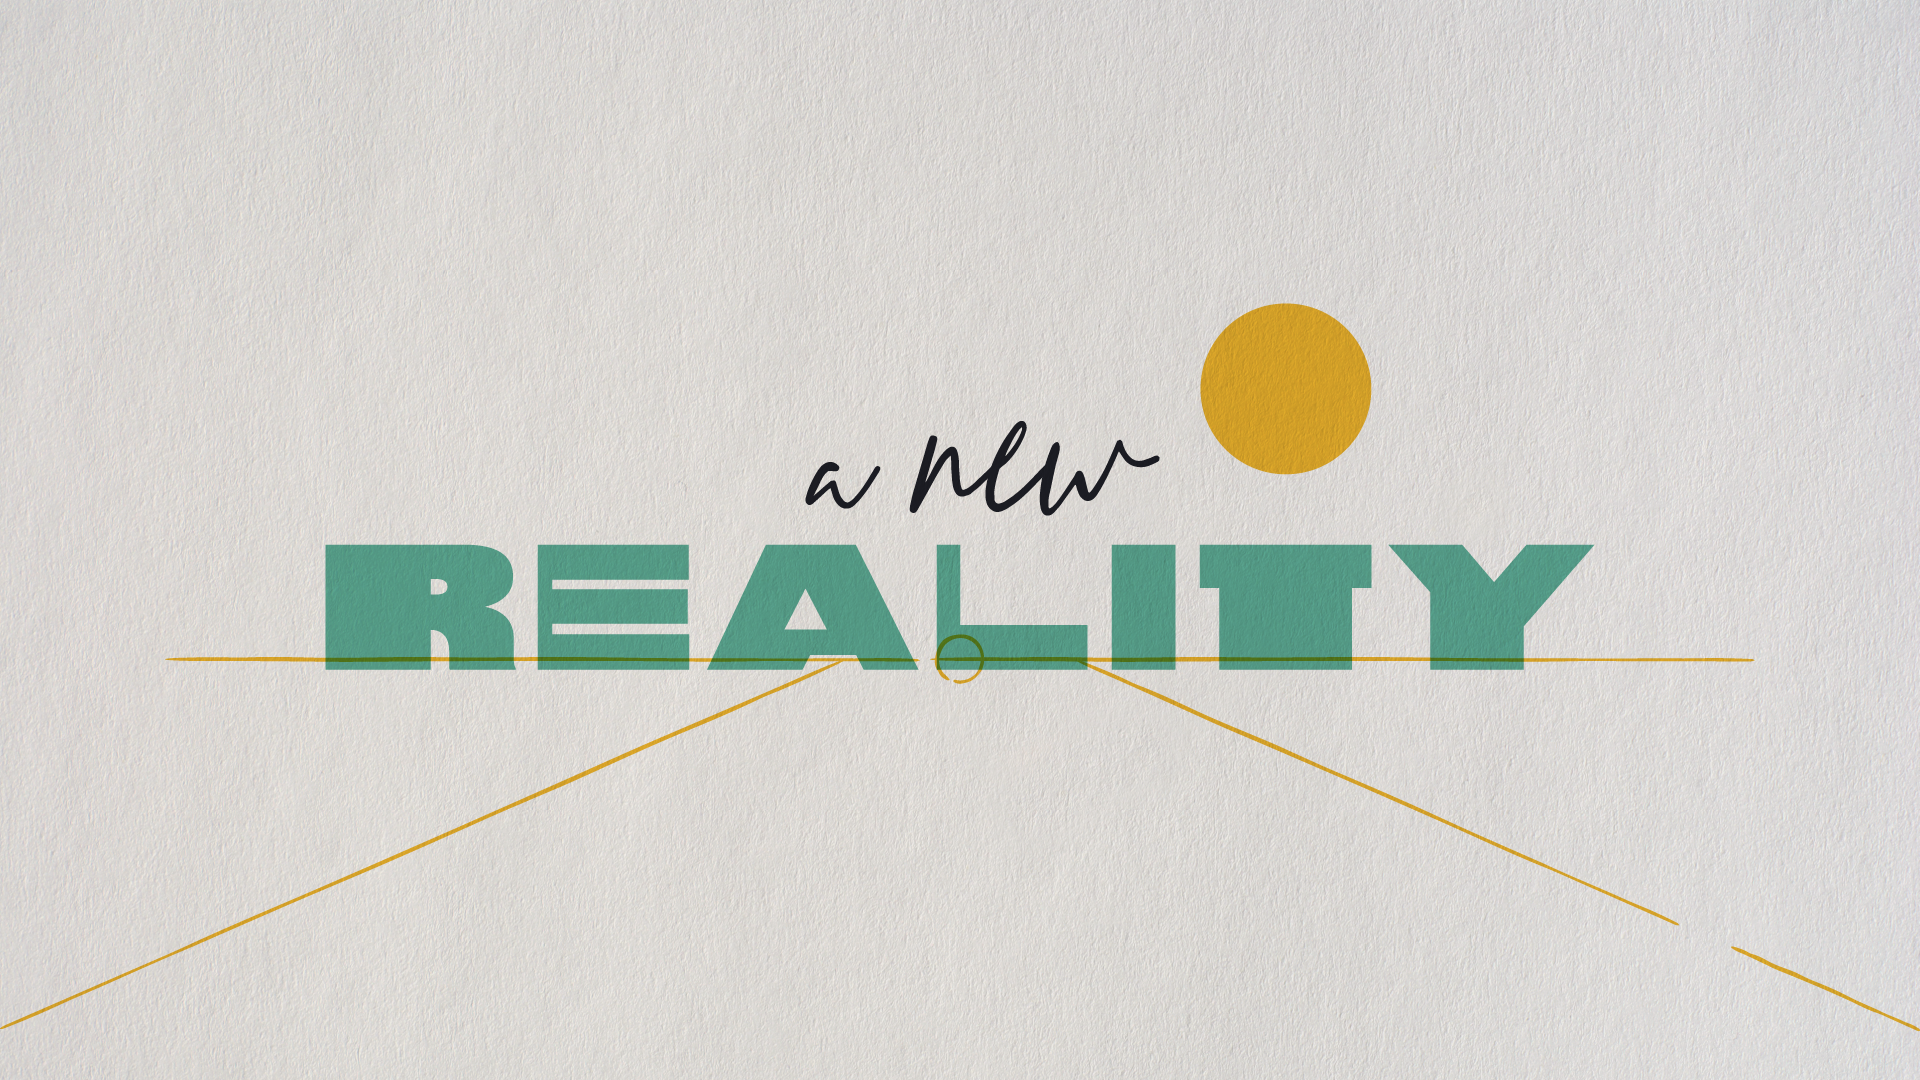 A New Reality – 11AM